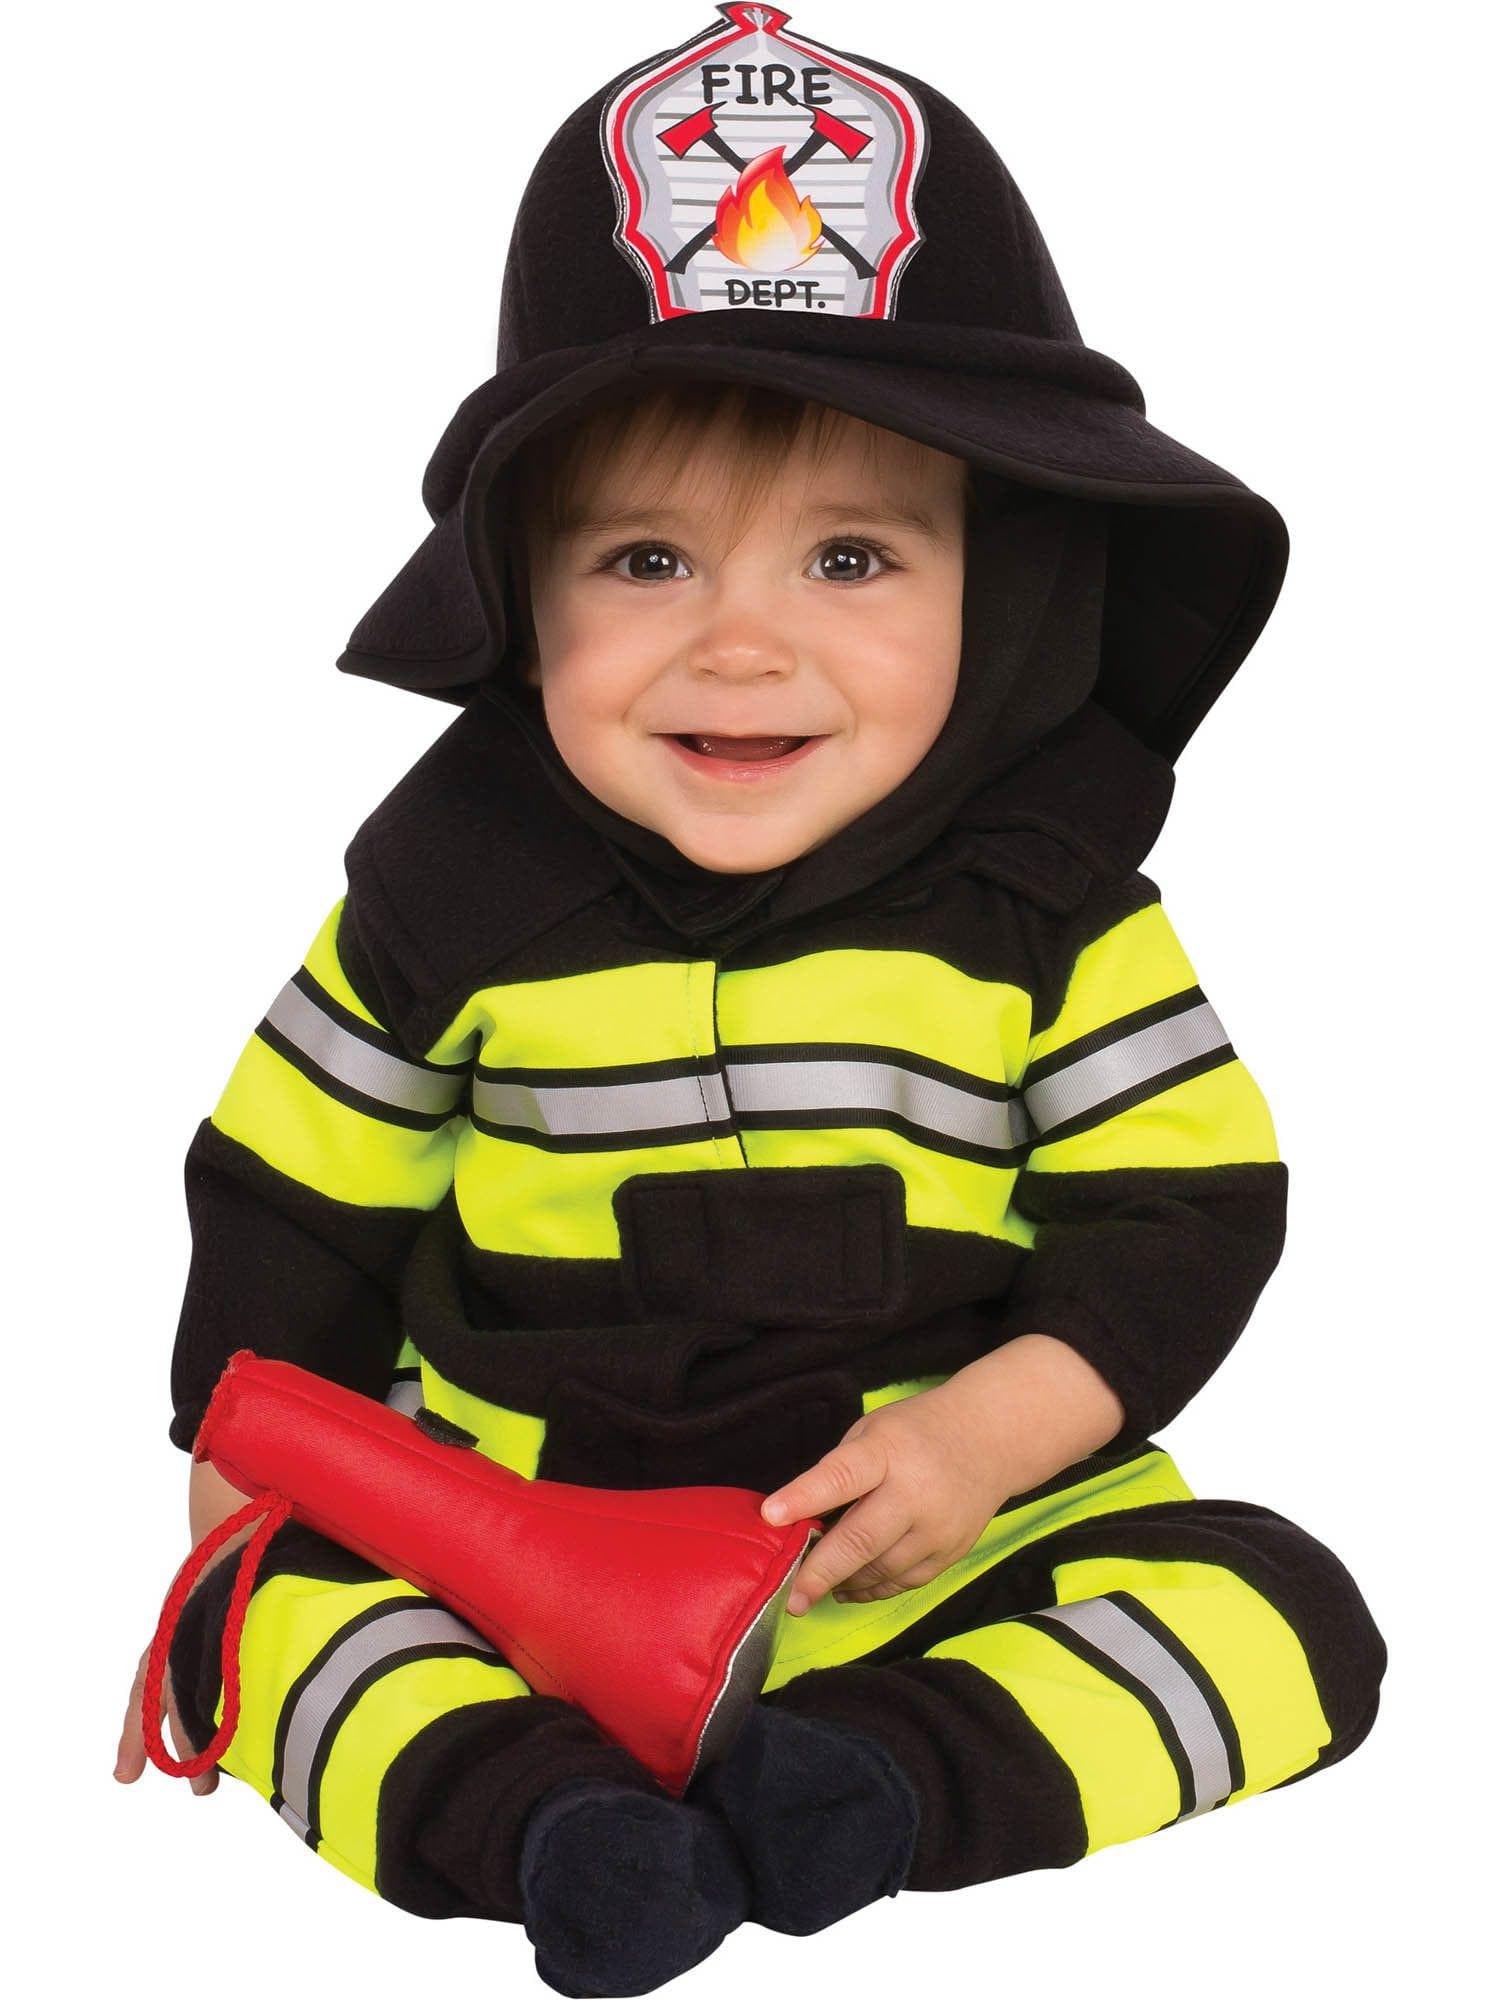 Baby/Toddler Fireman Costume - costumes.com